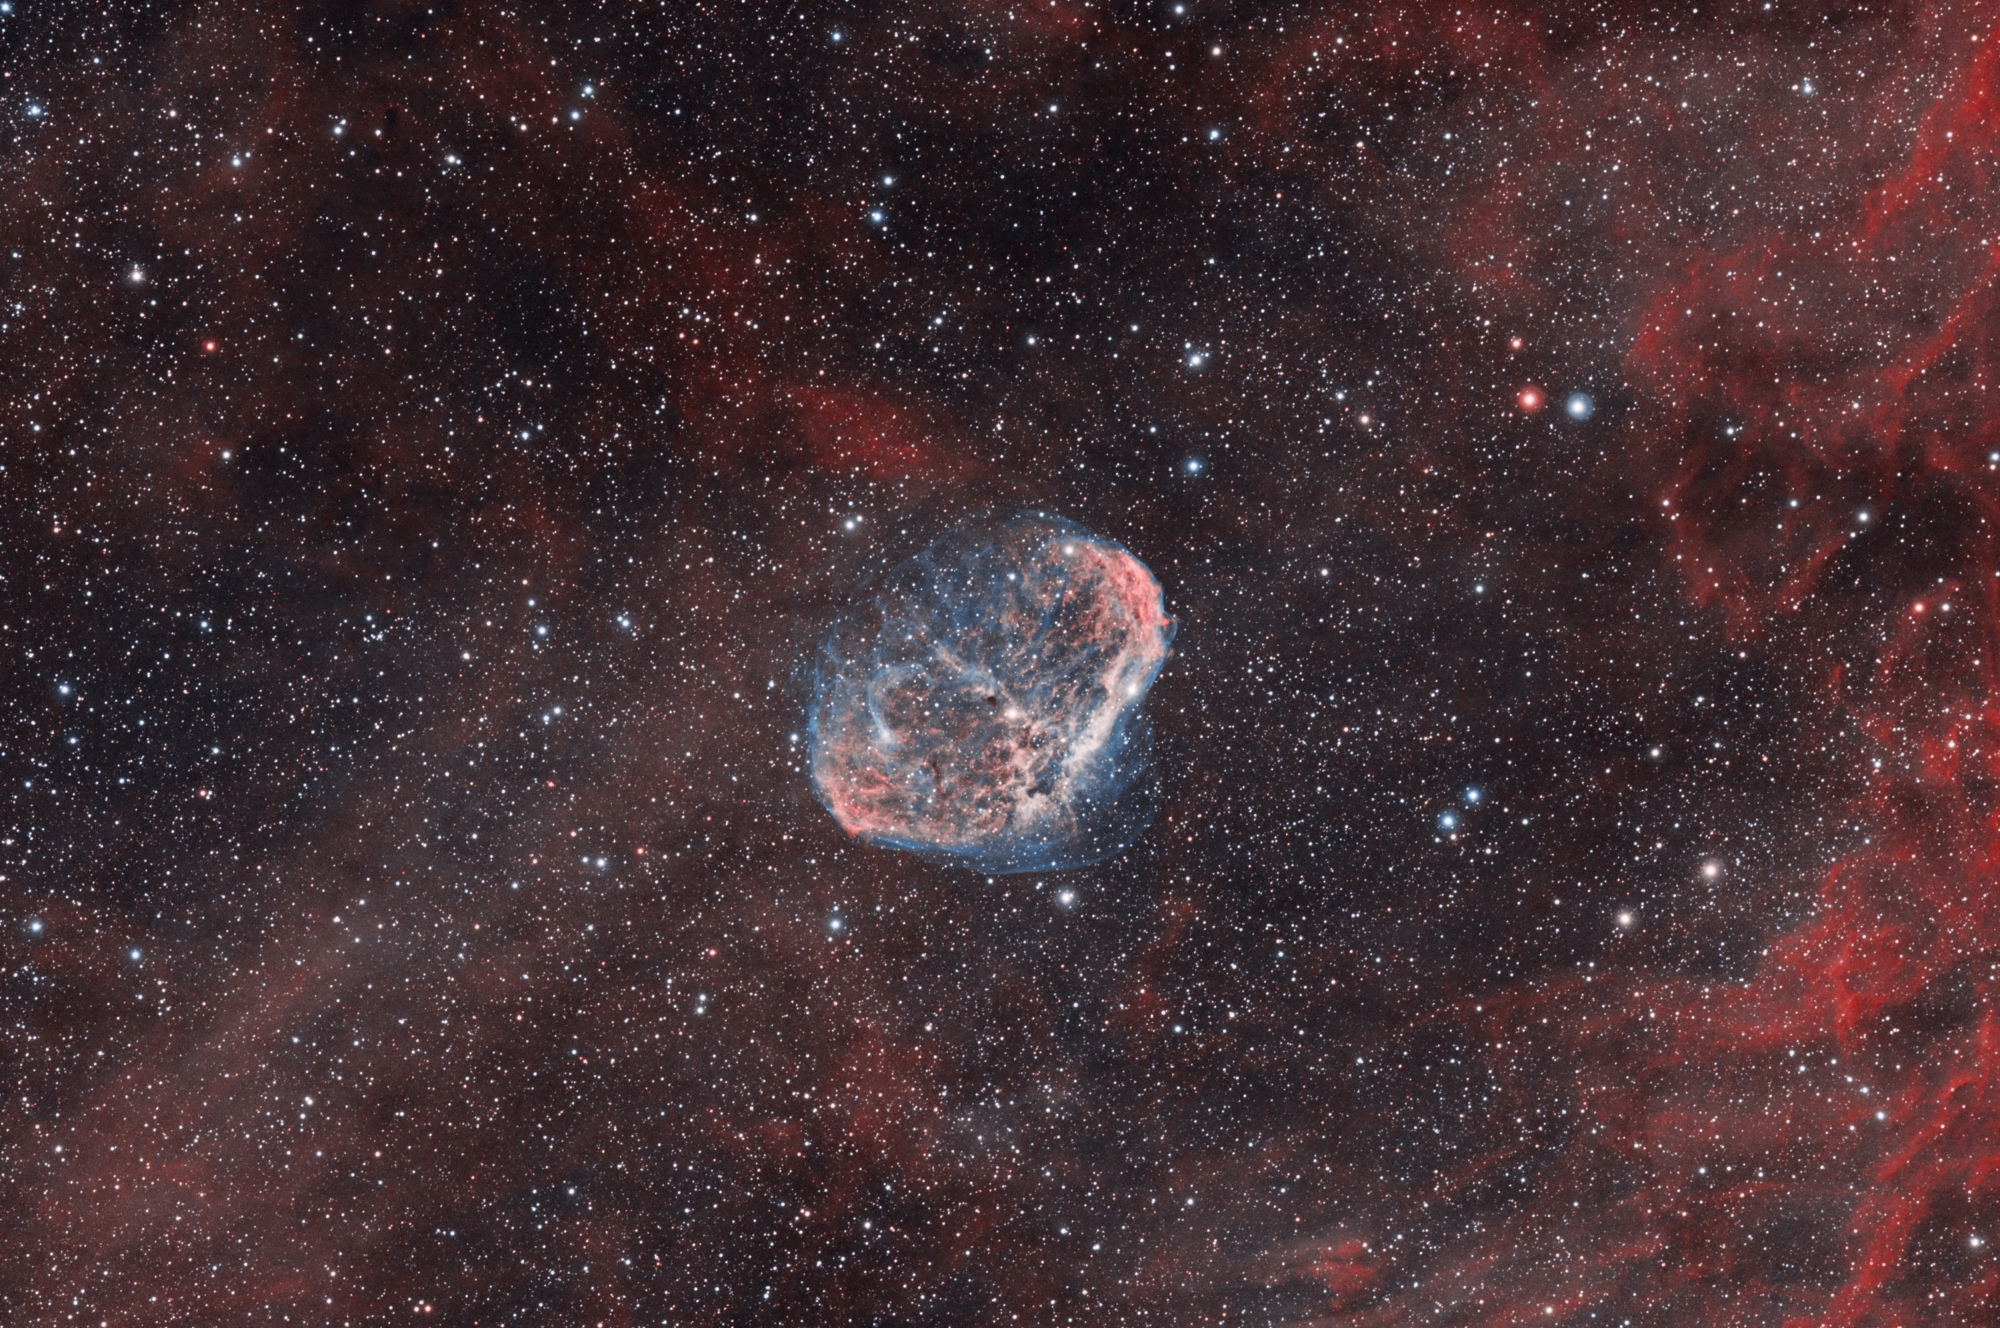 NGC_6888_SIRIL-1+2b-iris-2-cs5-4-FINAL-4.jpg